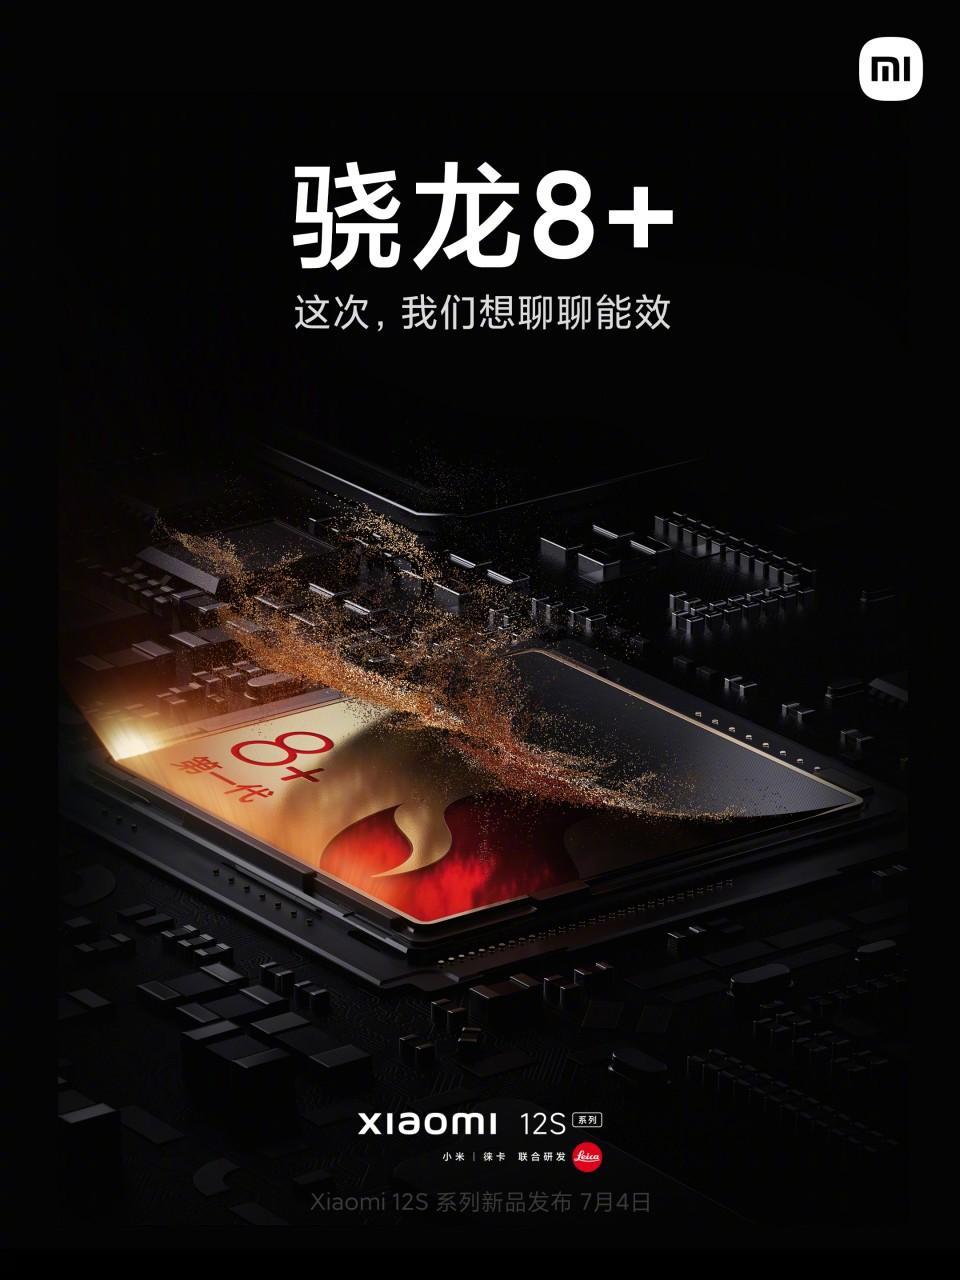 Xiaomi 12S и 12S Pro: камеры Leica и чипсет Snapdragon 8+ Gen 1 (gsmarena 004 33)